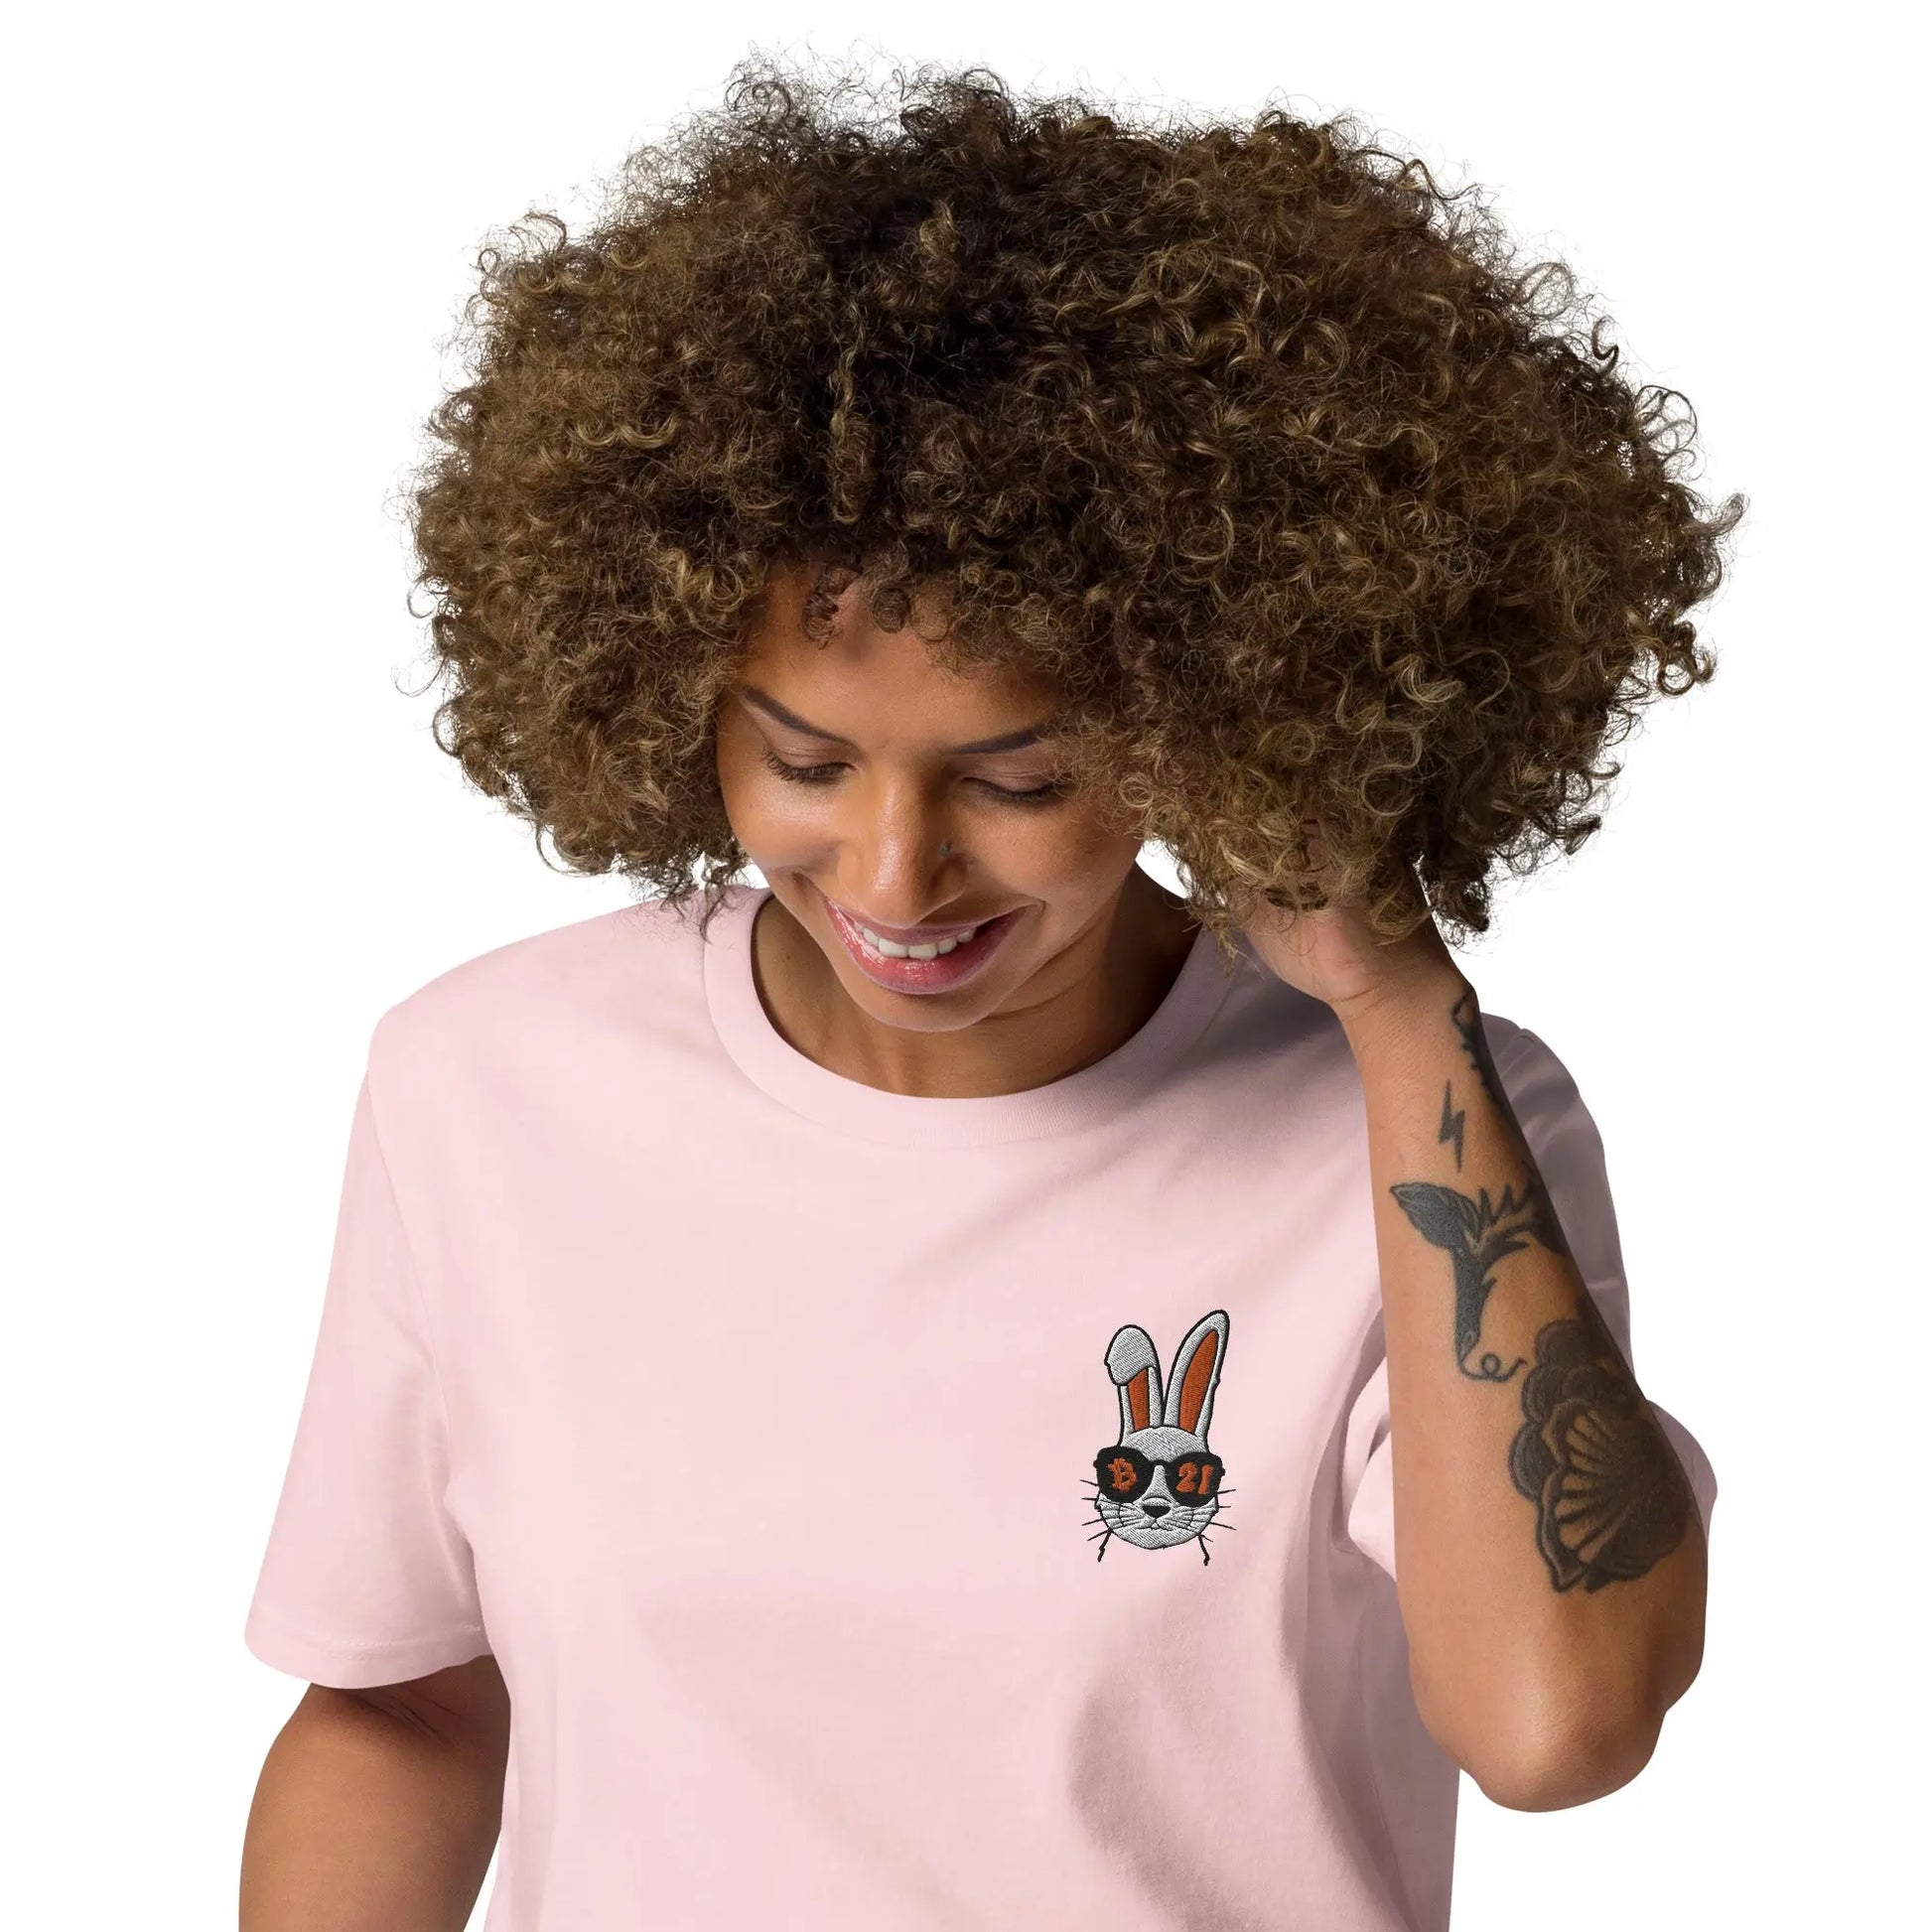 Rabbit 21 - Premium Embroidered Unisex Organic Cotton Bitcoin T-shirt Pink Color